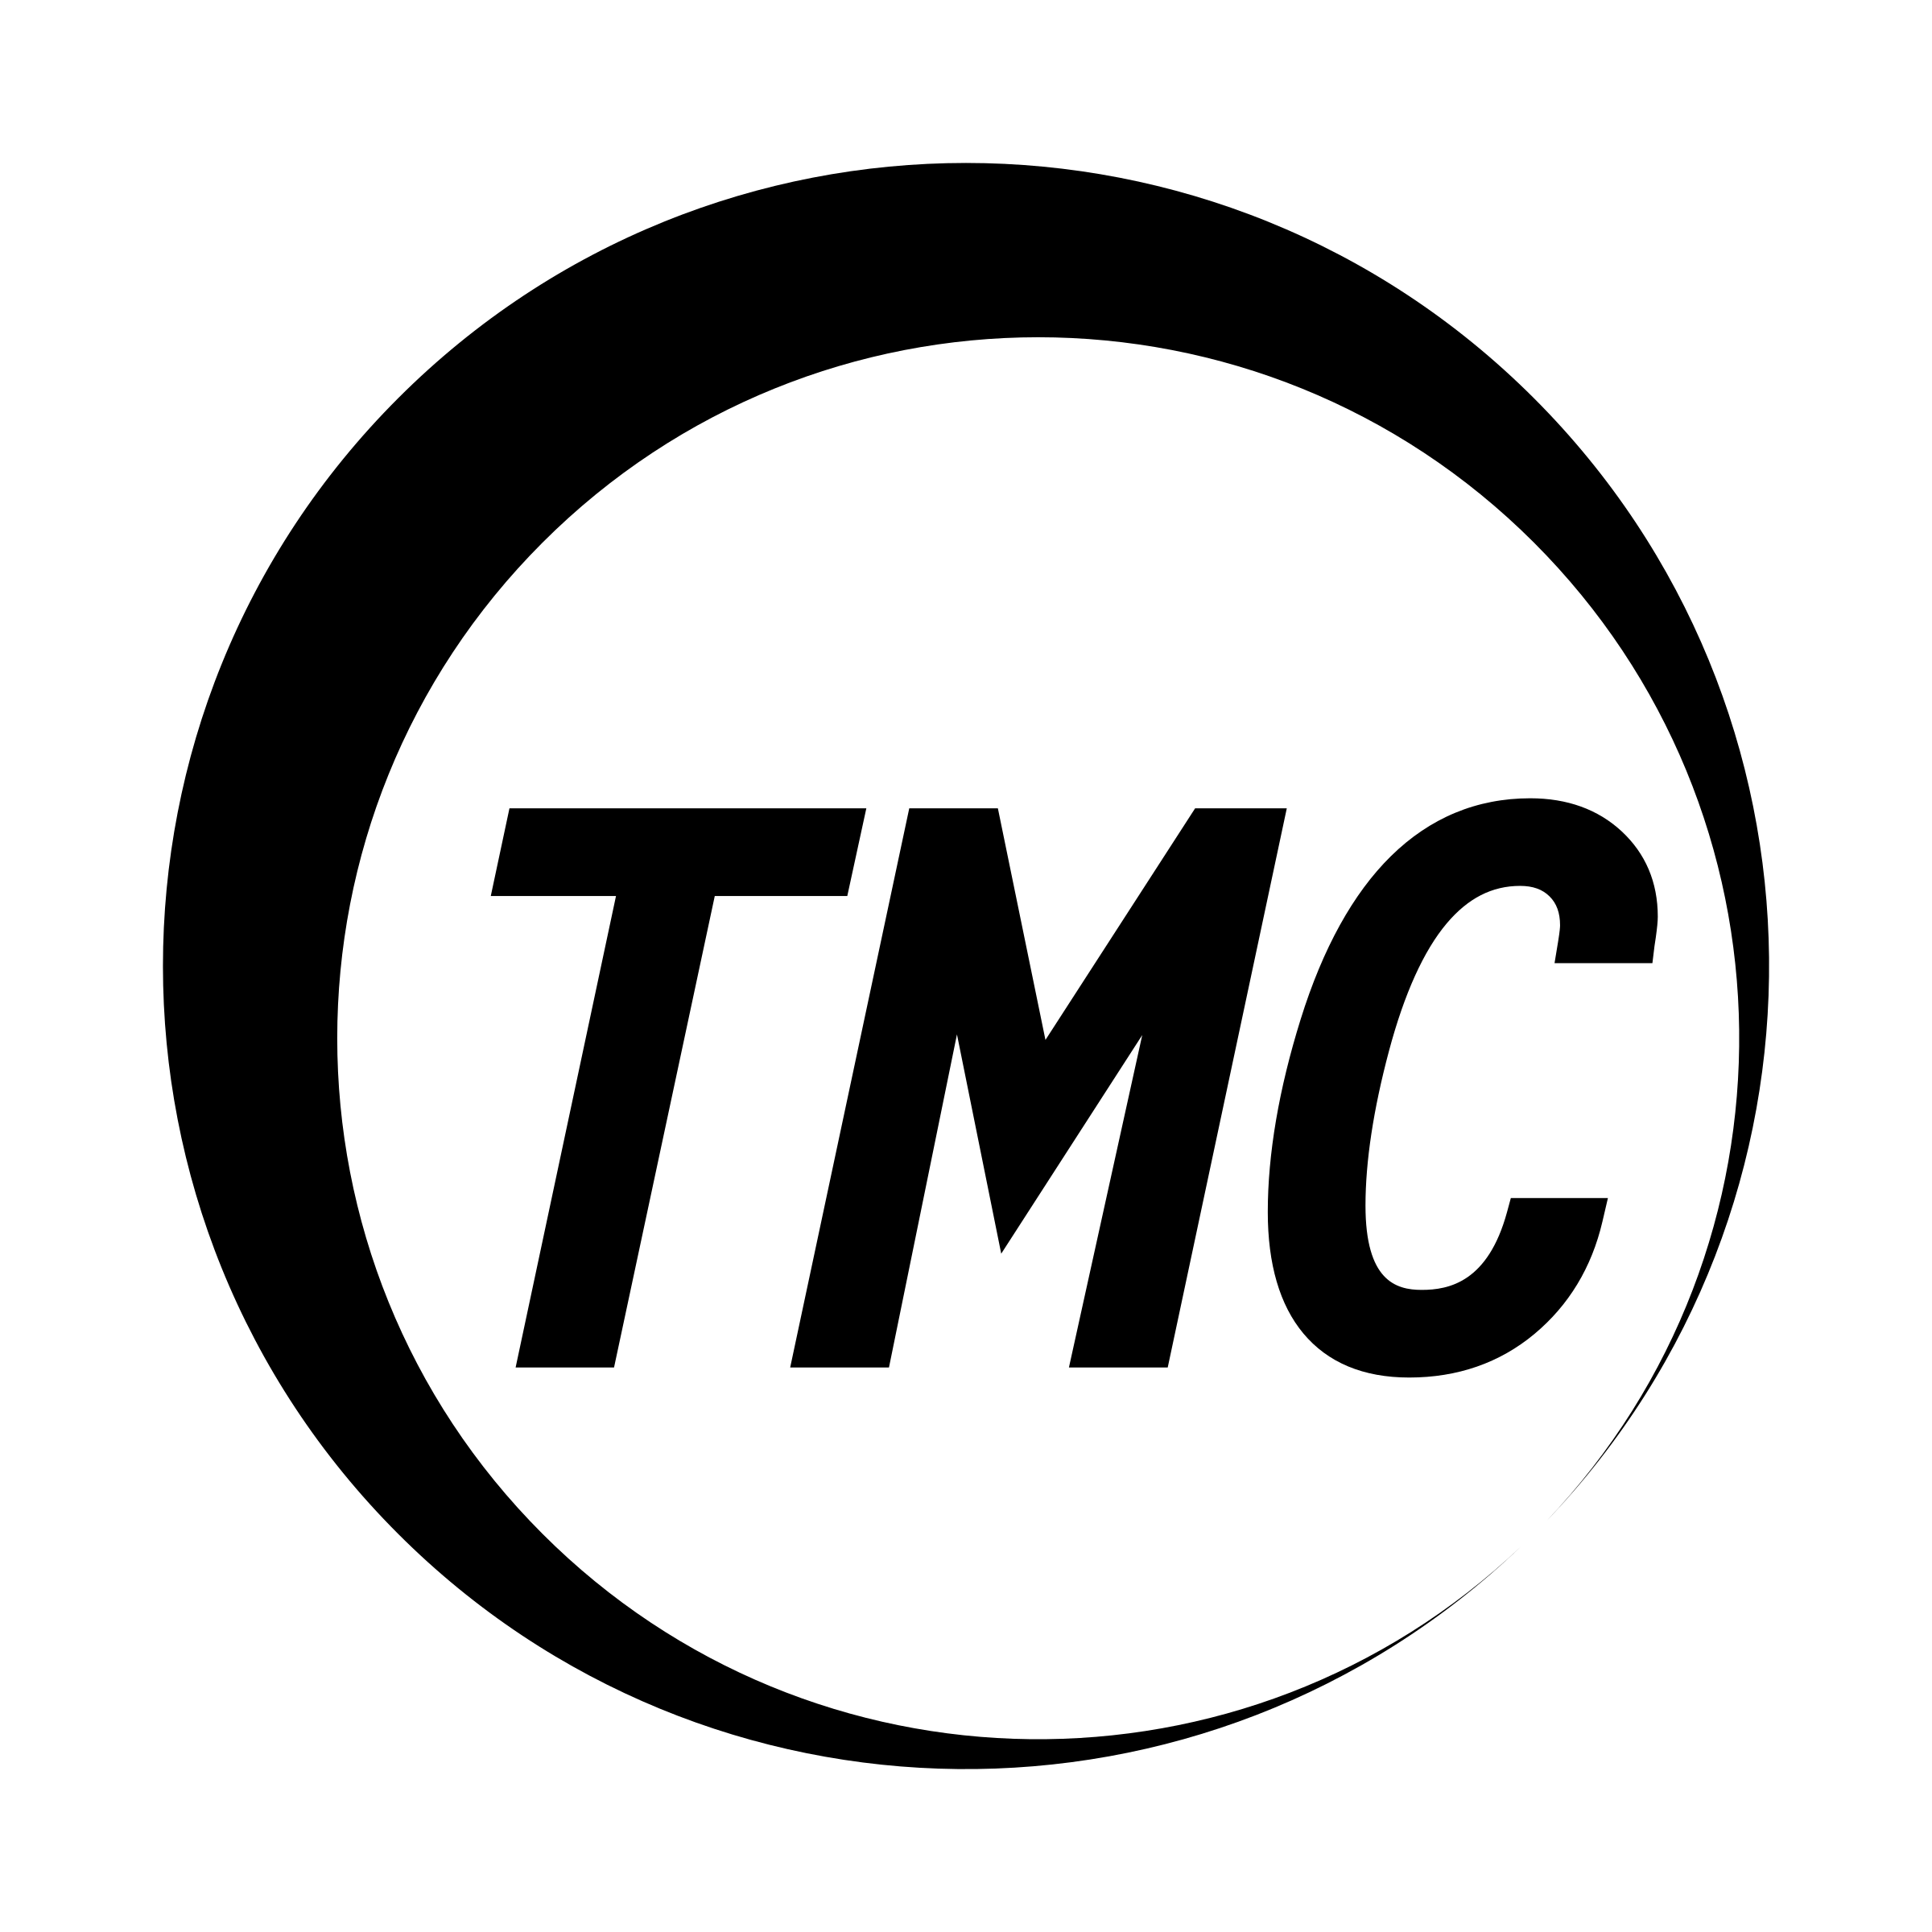 TMC Logo - TMC Logo PNG Transparent & SVG Vector - Freebie Supply